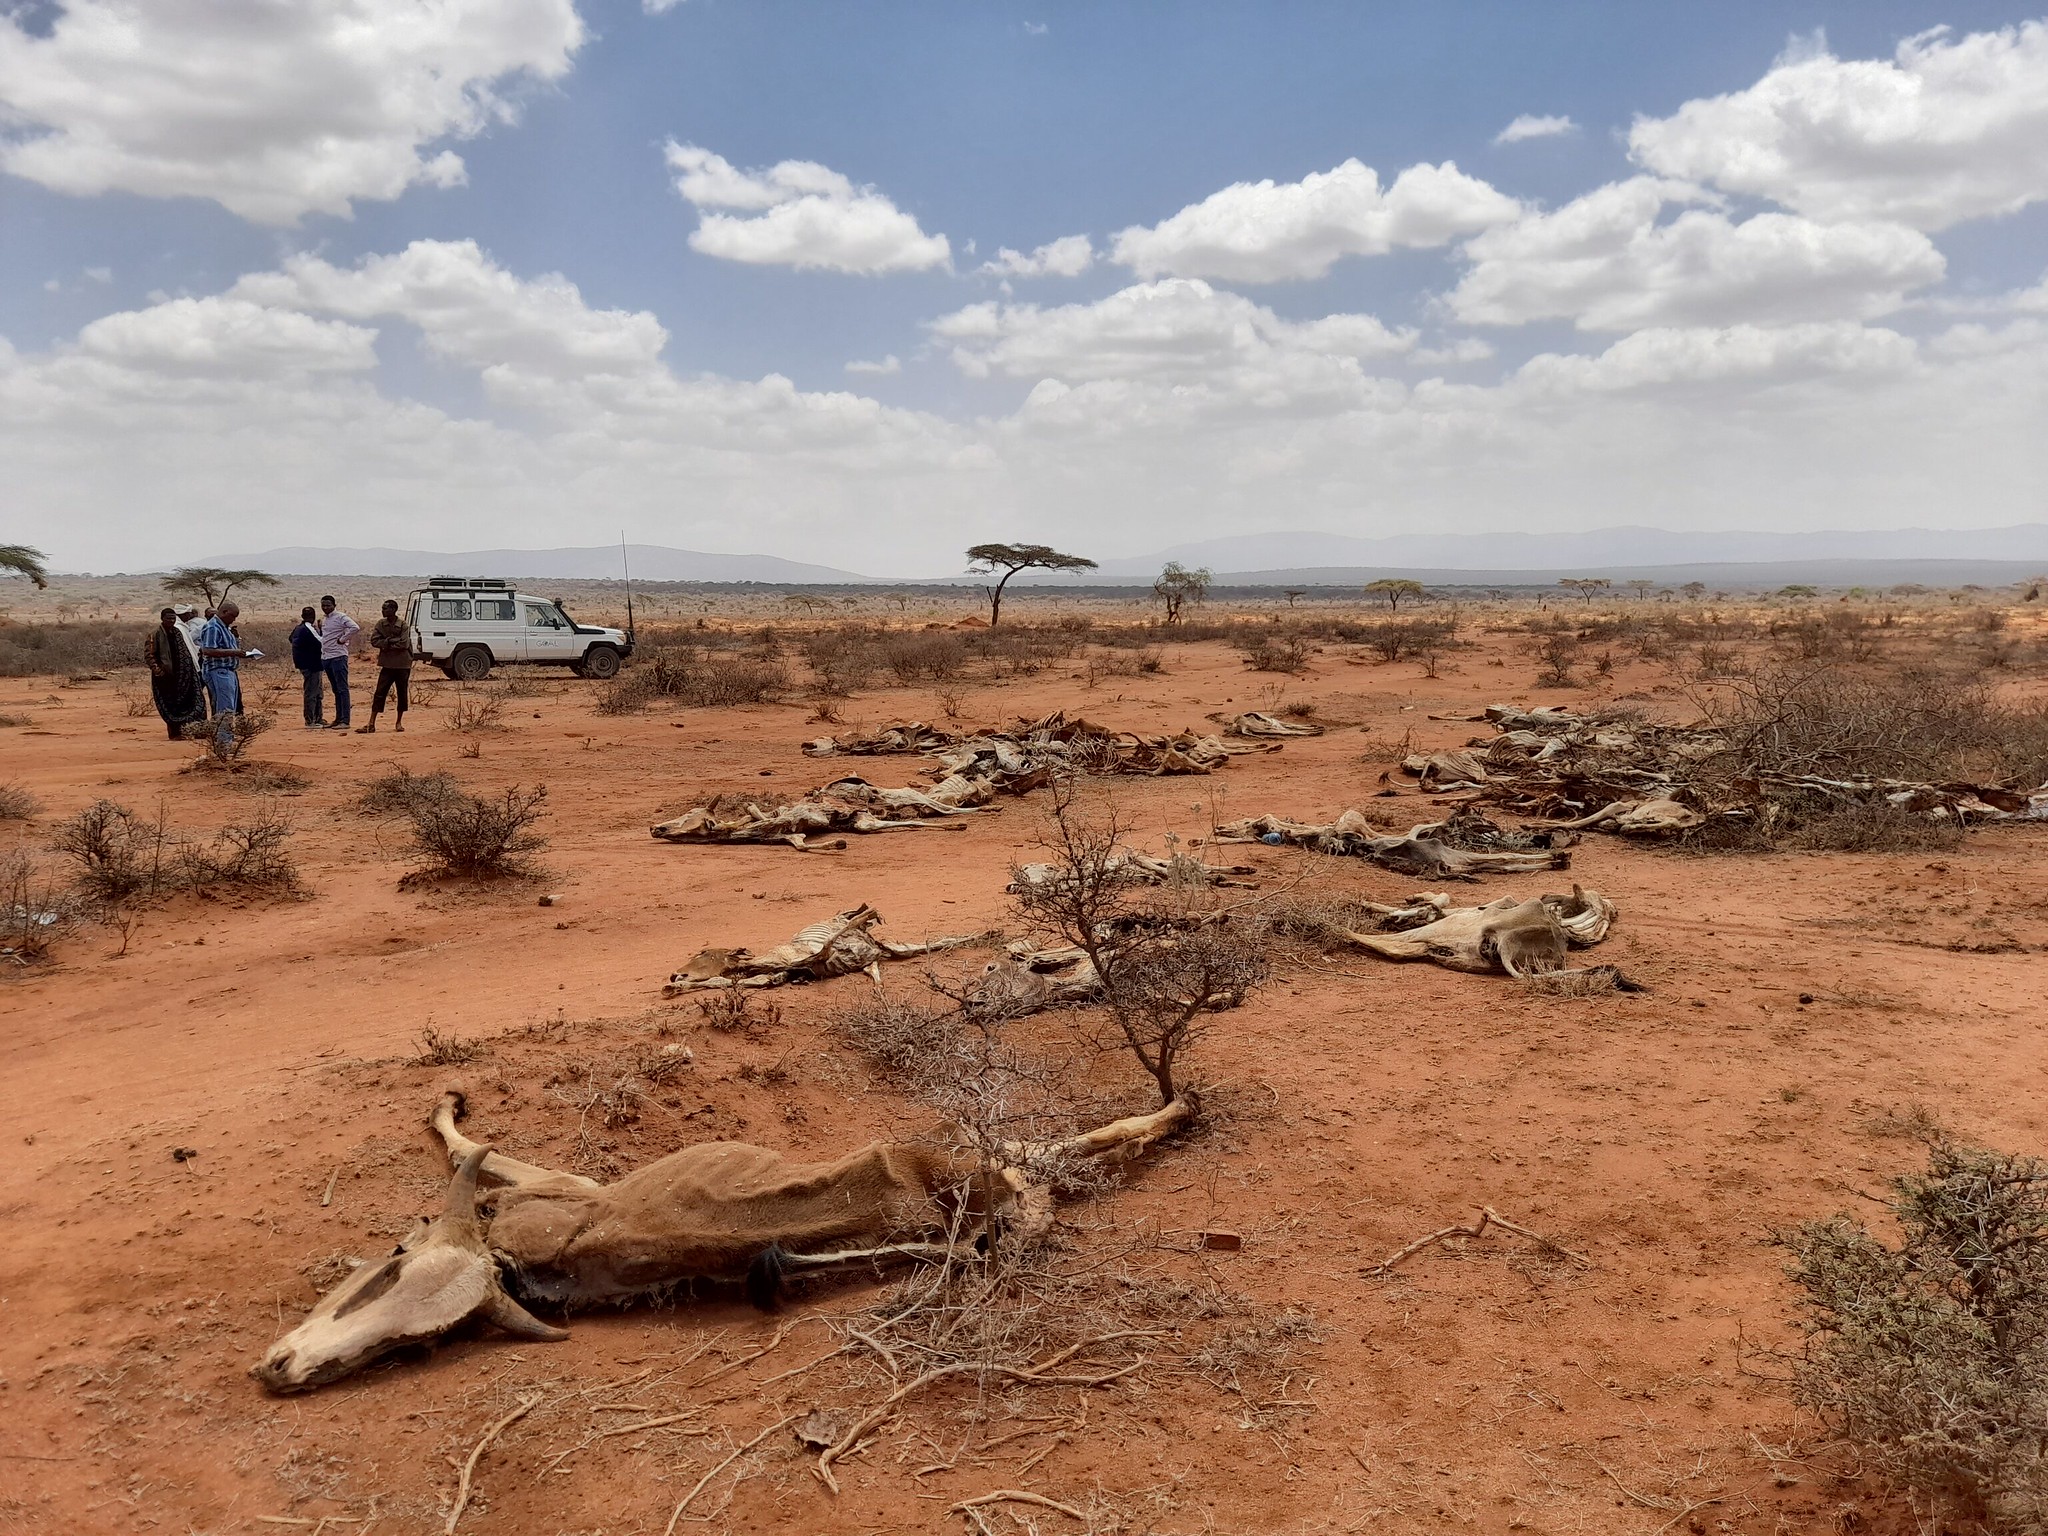 Dead livestock and a deserted landscape.